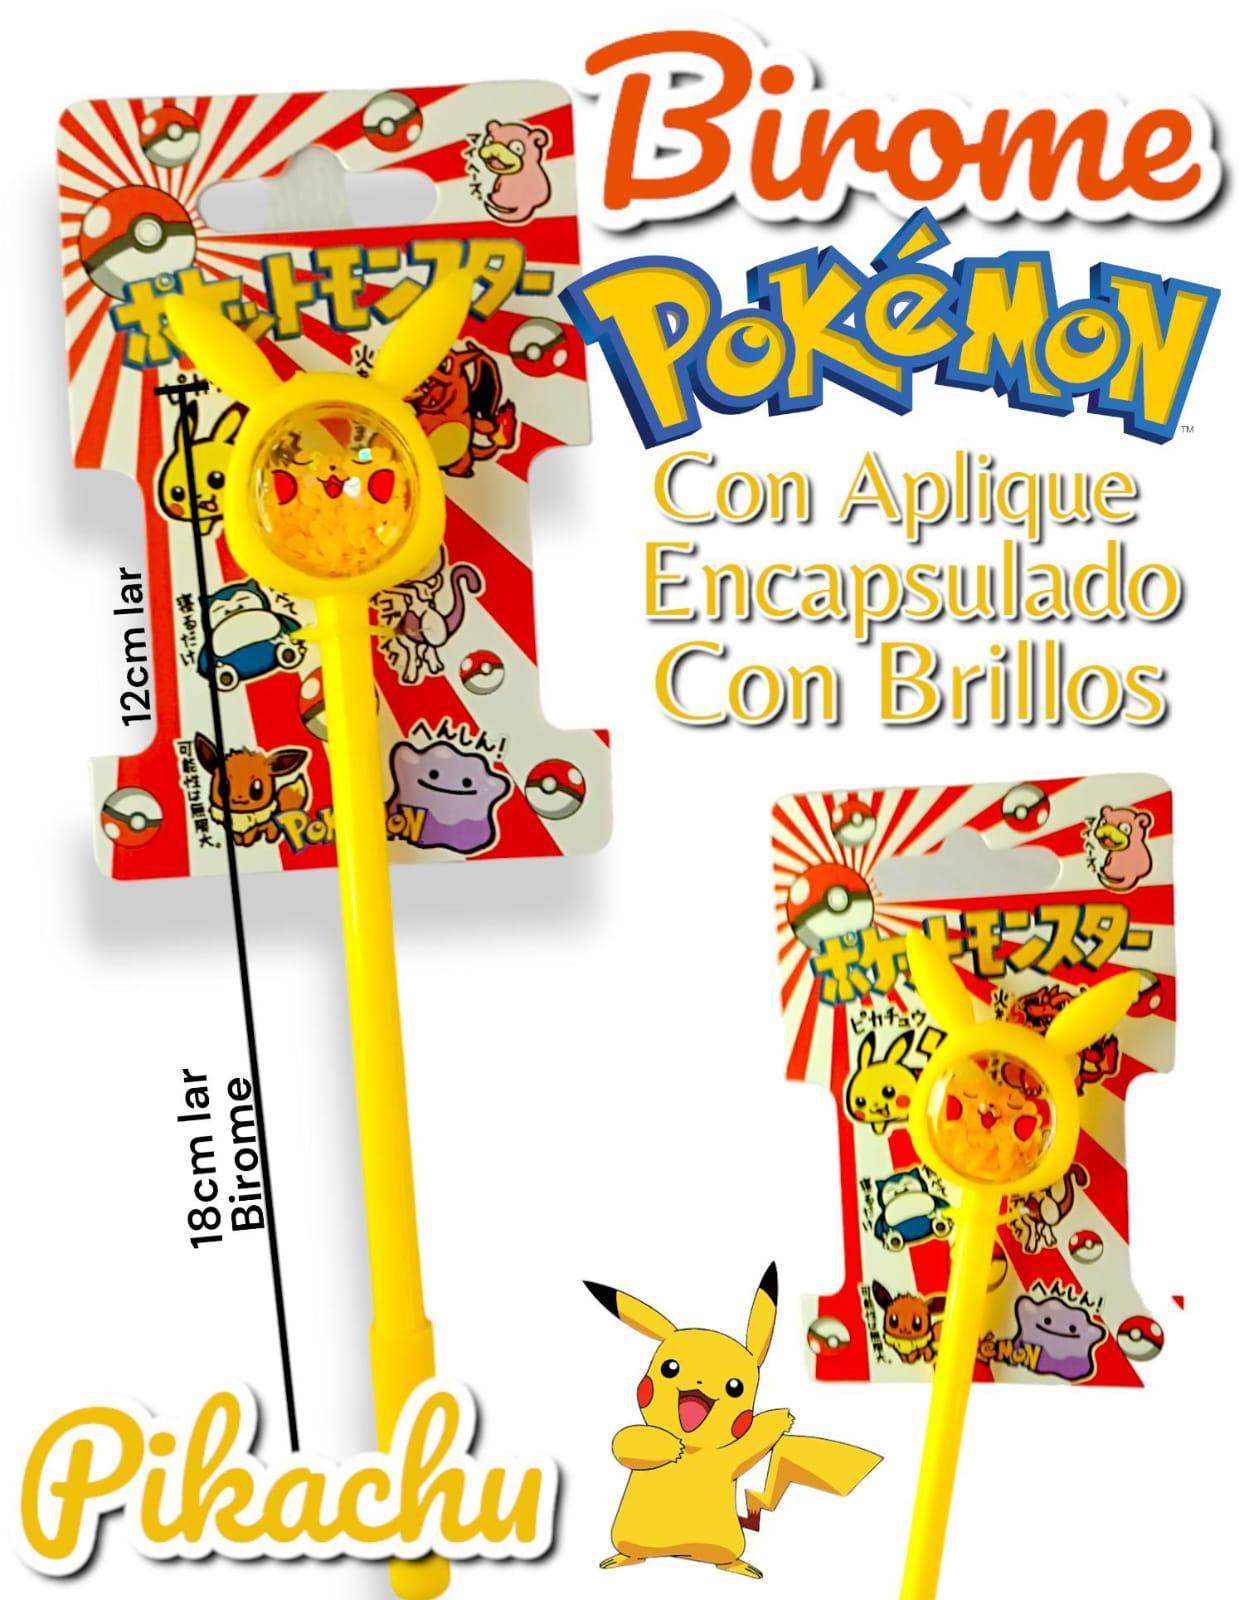 Birome Pokemon Con Aplique Encapsulado Con Brillos (Con Carton Exhibidor)